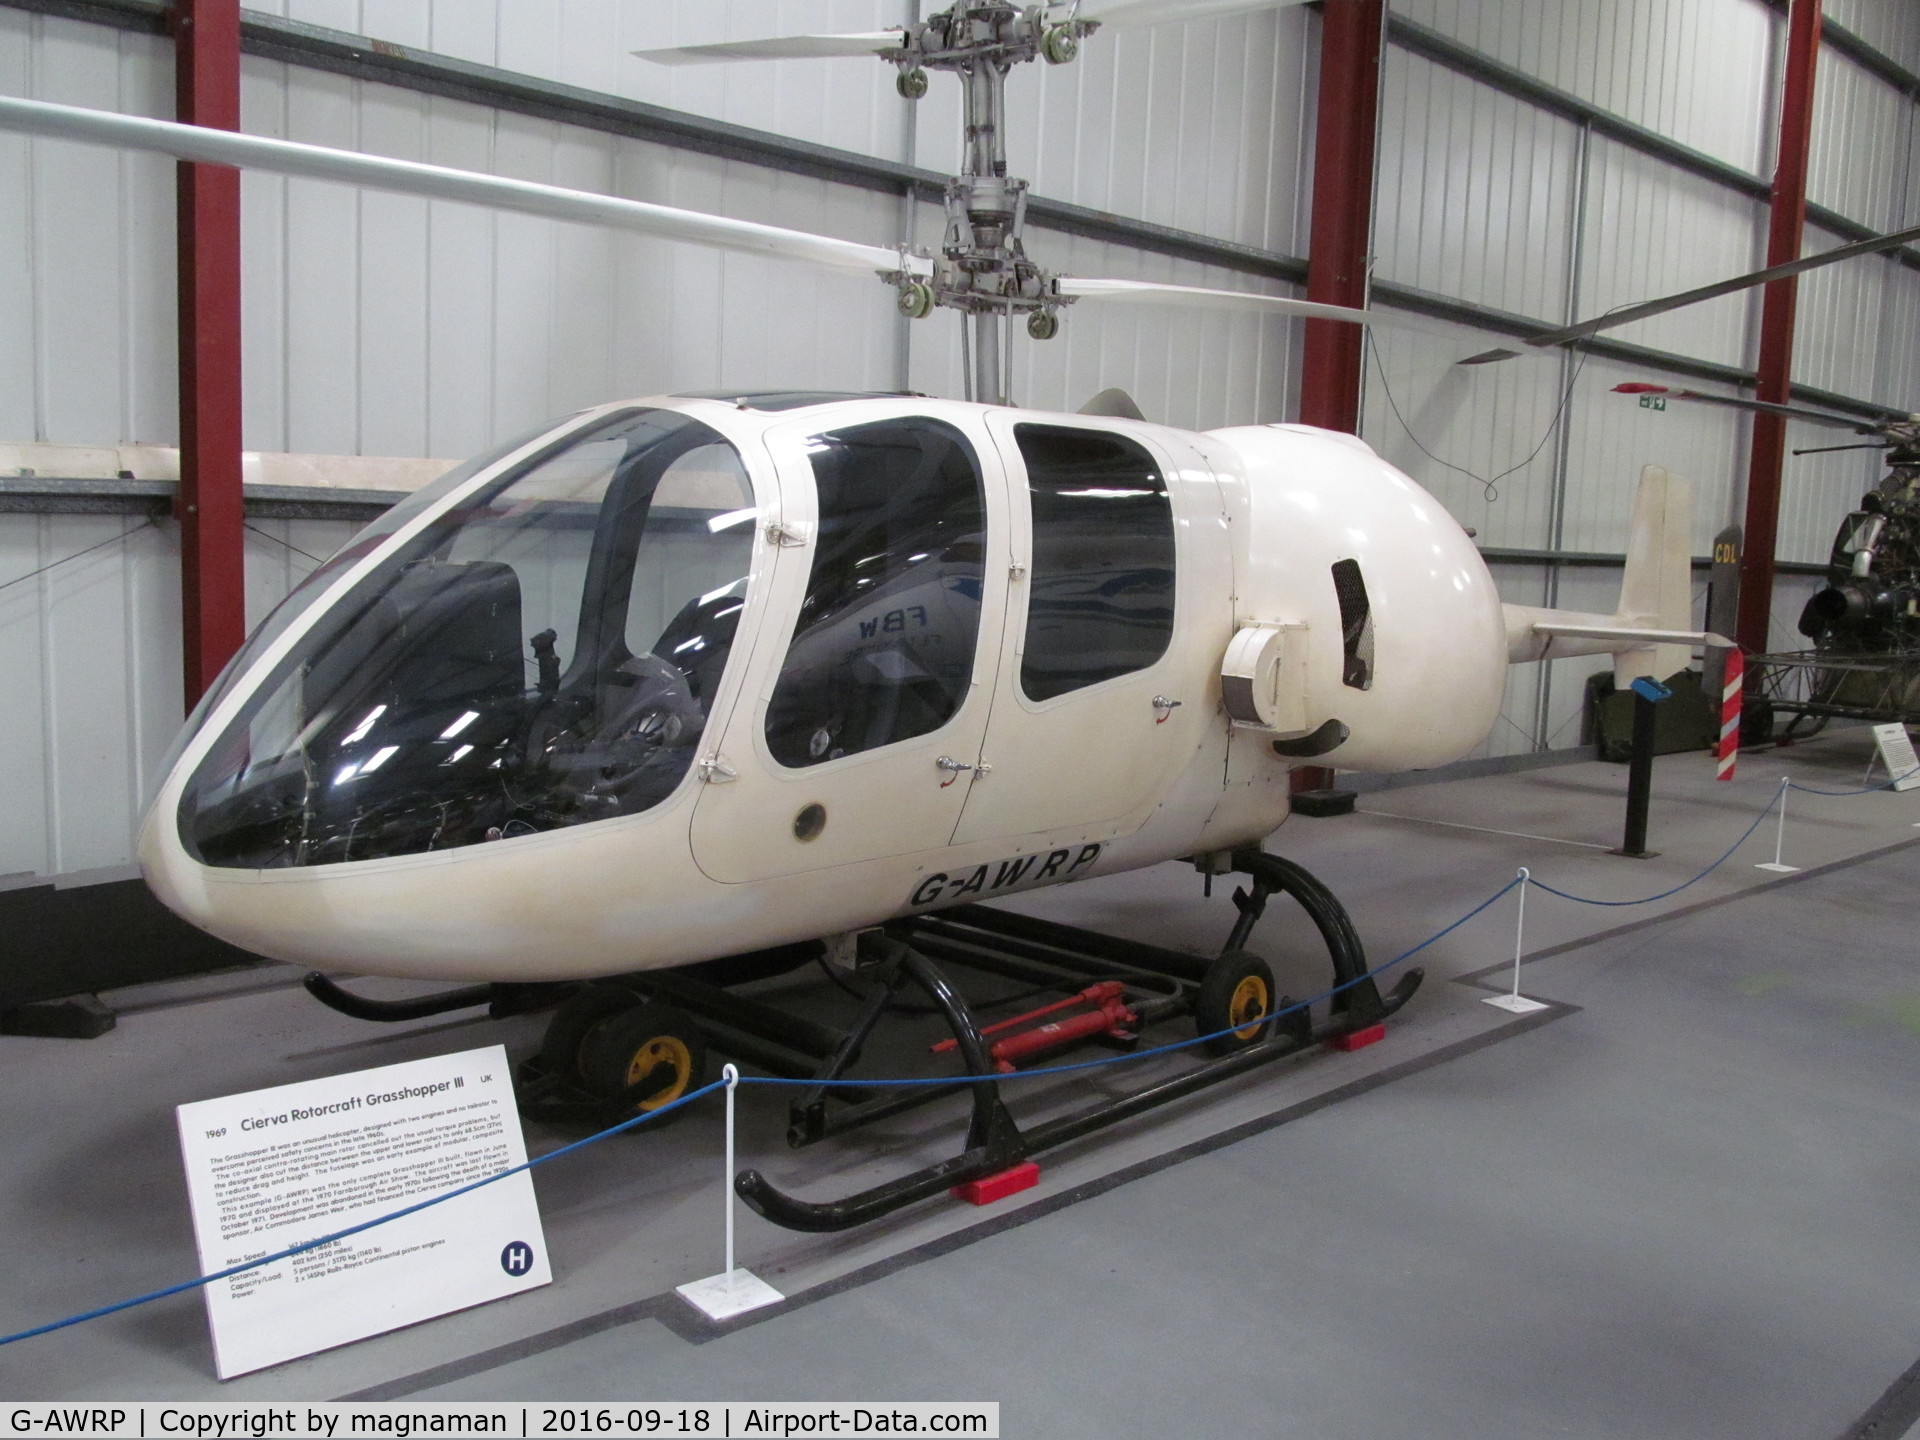 G-AWRP, 1968 Servotec Cierva CR.LTH1 Grasshopper II C/N GB.1, Unique chopper. At The Helicopter Museum, Weston-super-Mare, UK.